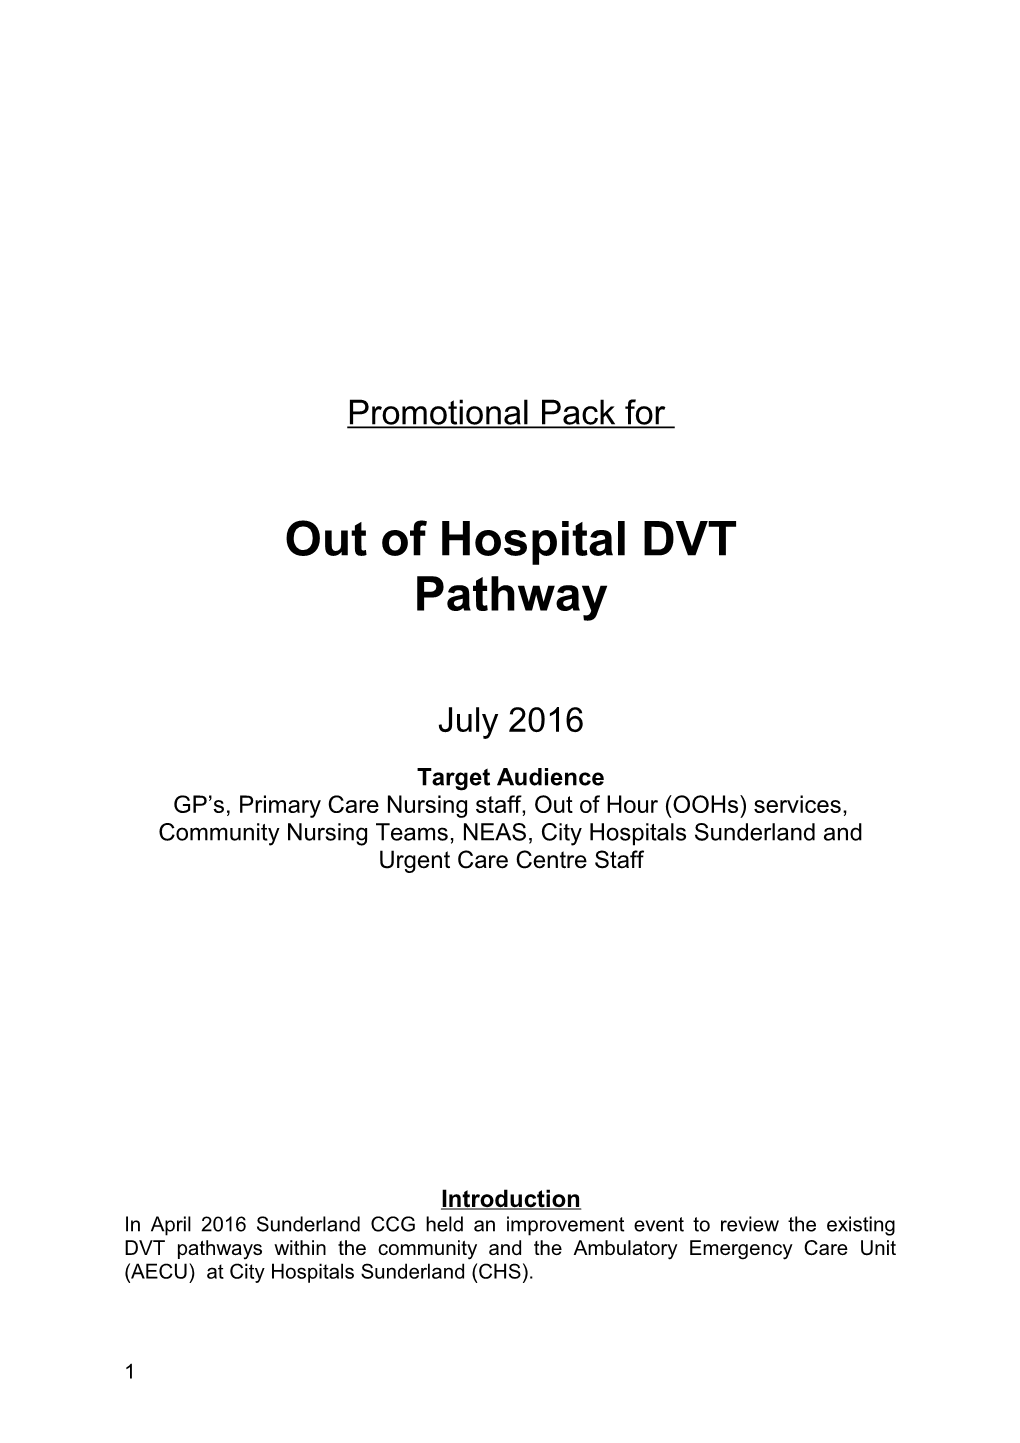 Out of Hospital DVT